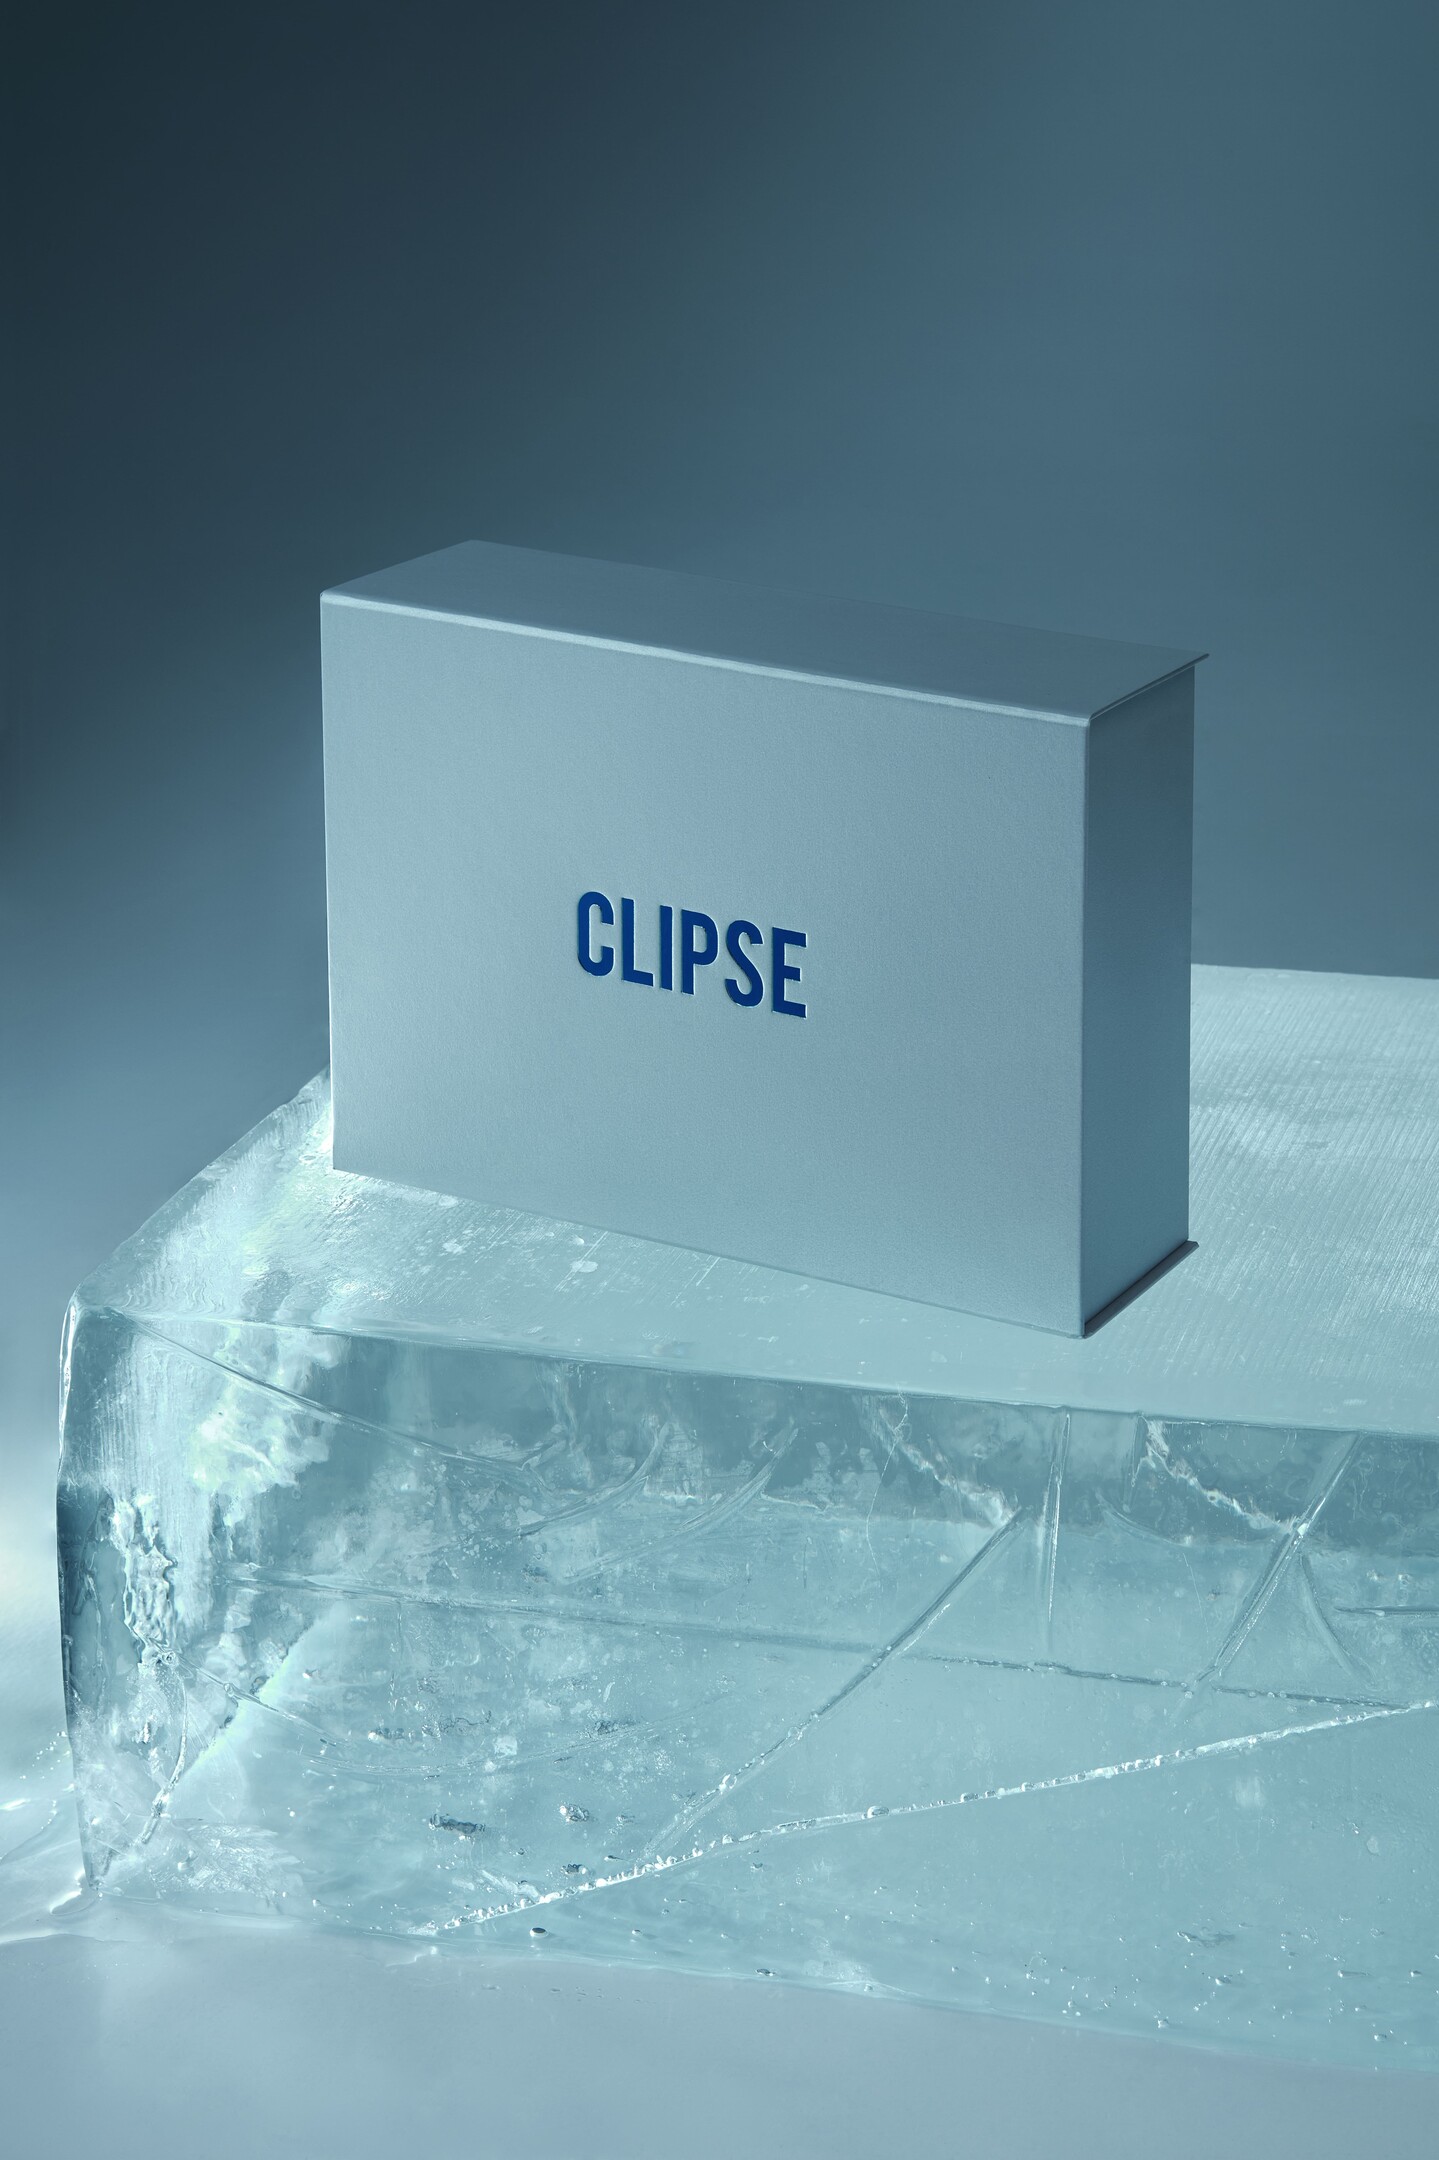 clipse-ice_5887-2-min.B5FG.jpg